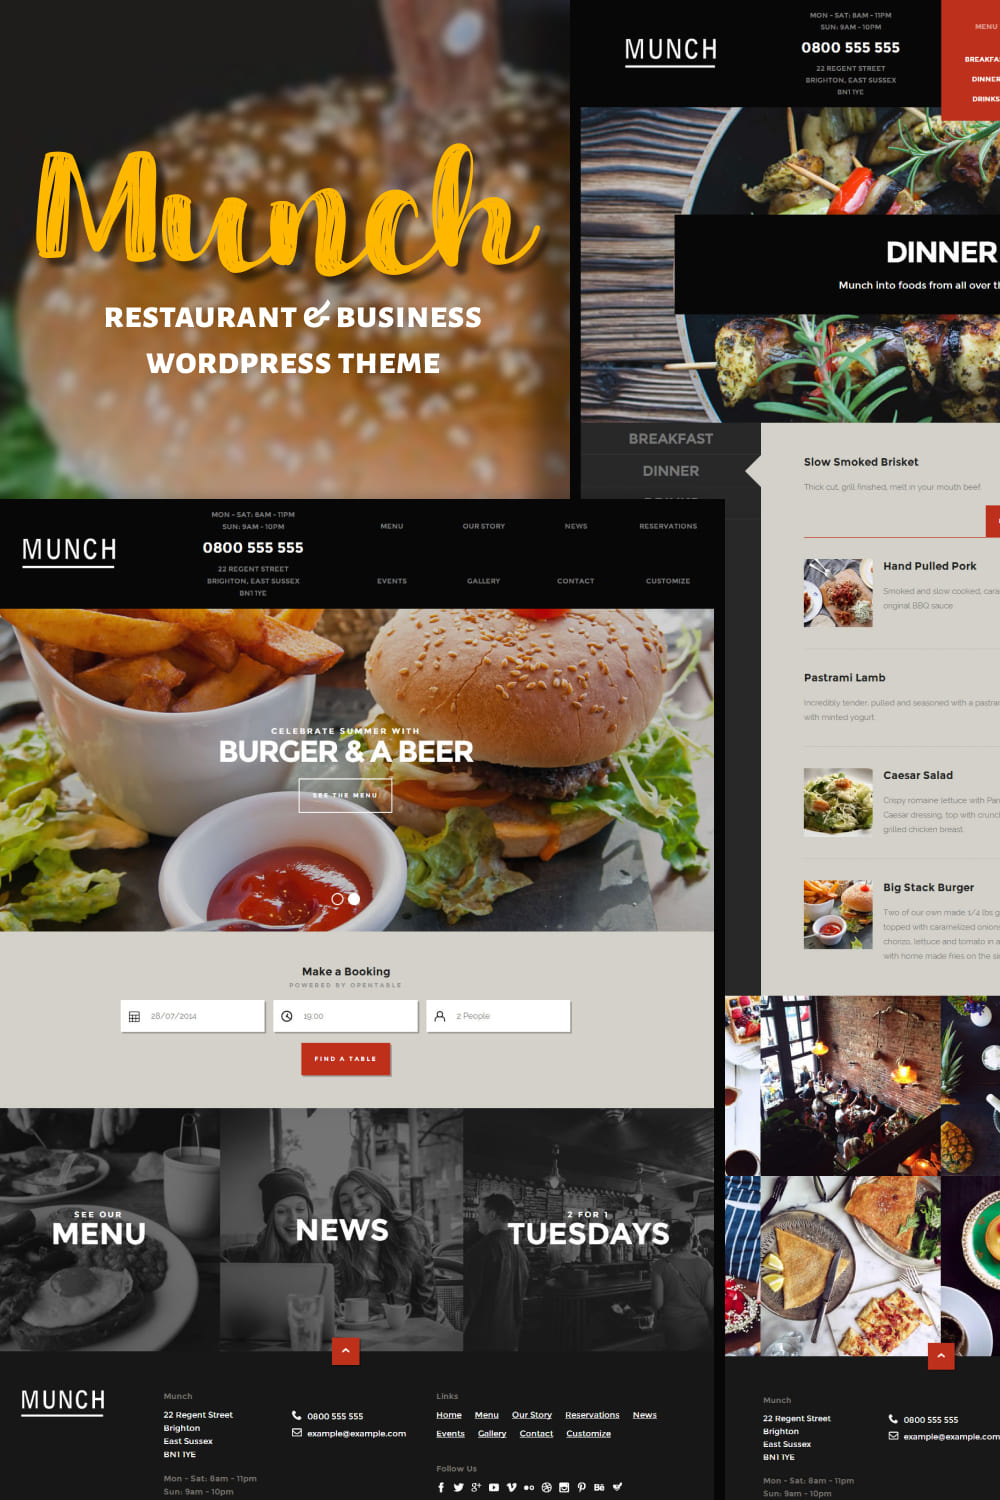 Menu and news of the Munch - Restaurant & Business WordPress Theme.